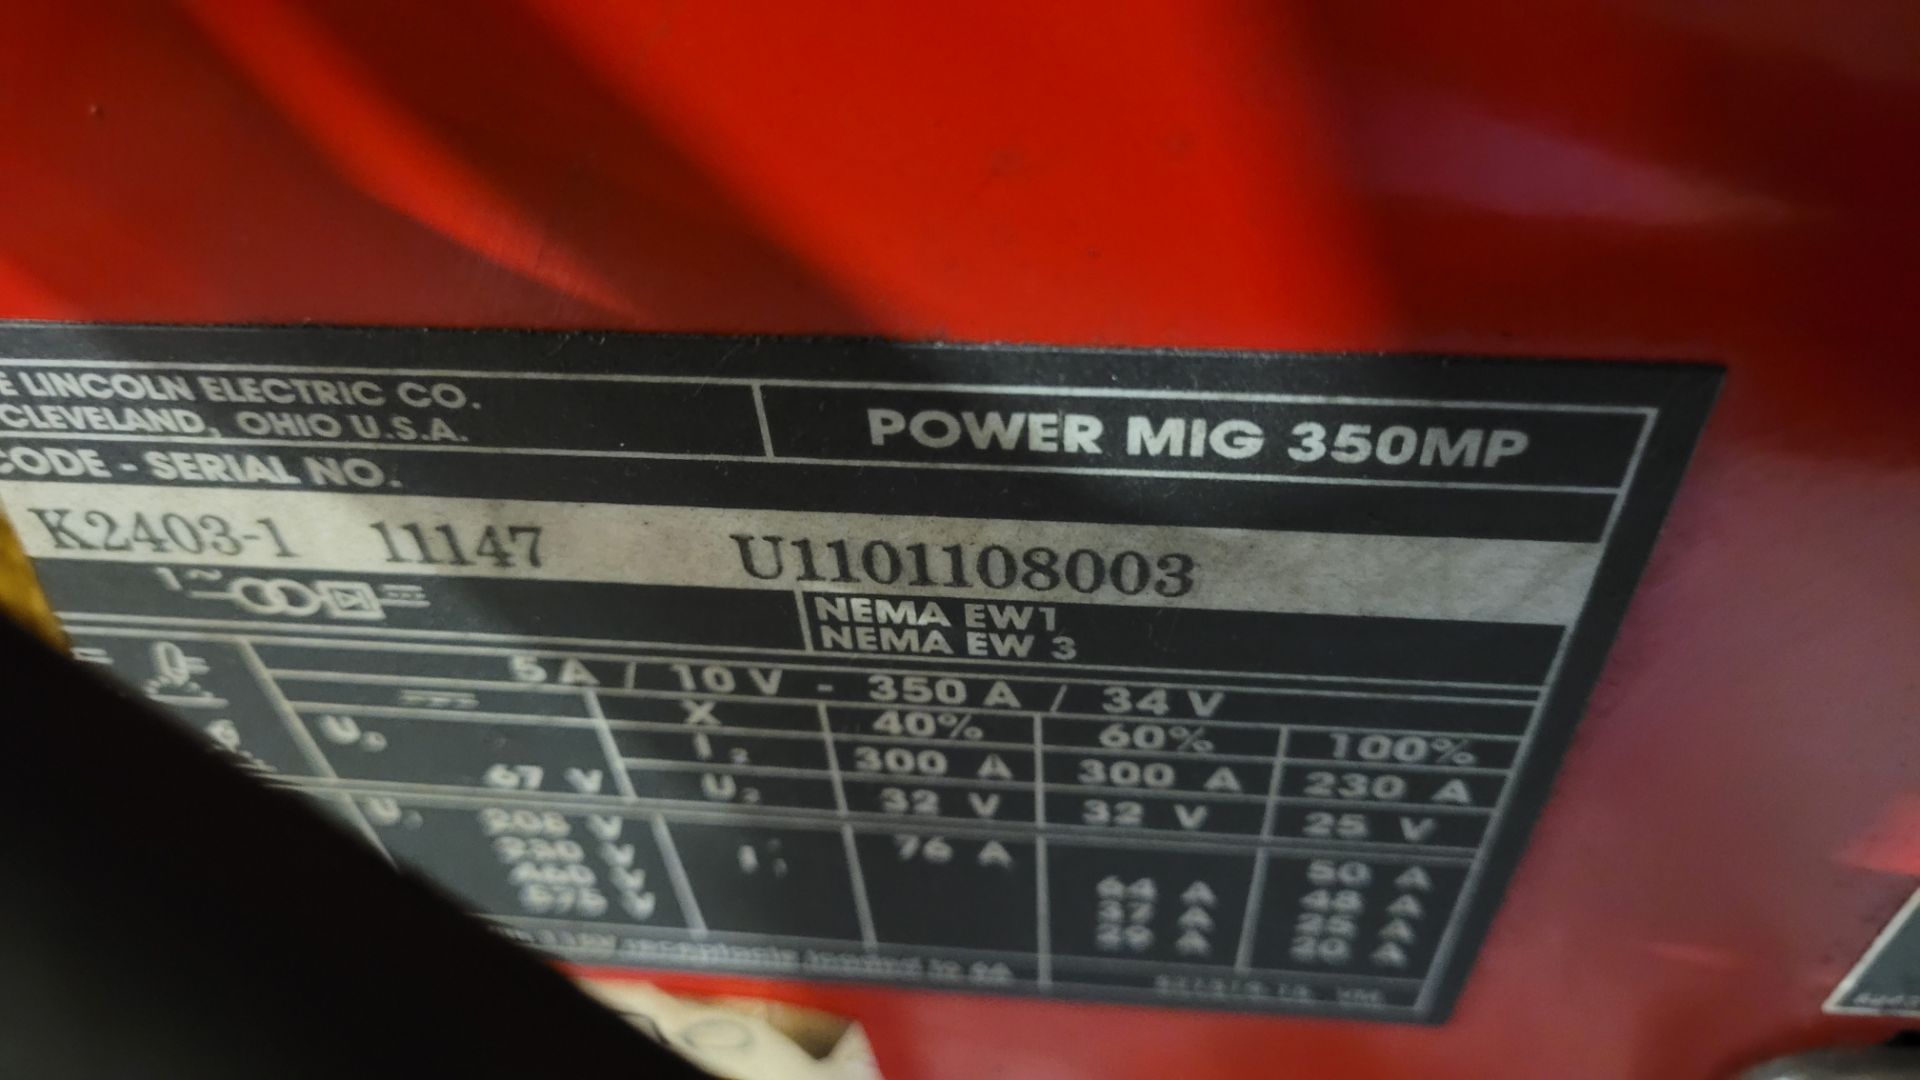 LINCOLN ELECTRIC 350 MP POWER MIG WELDER, CODE K2403-1 11147, S/N U1101108003 - Image 3 of 3